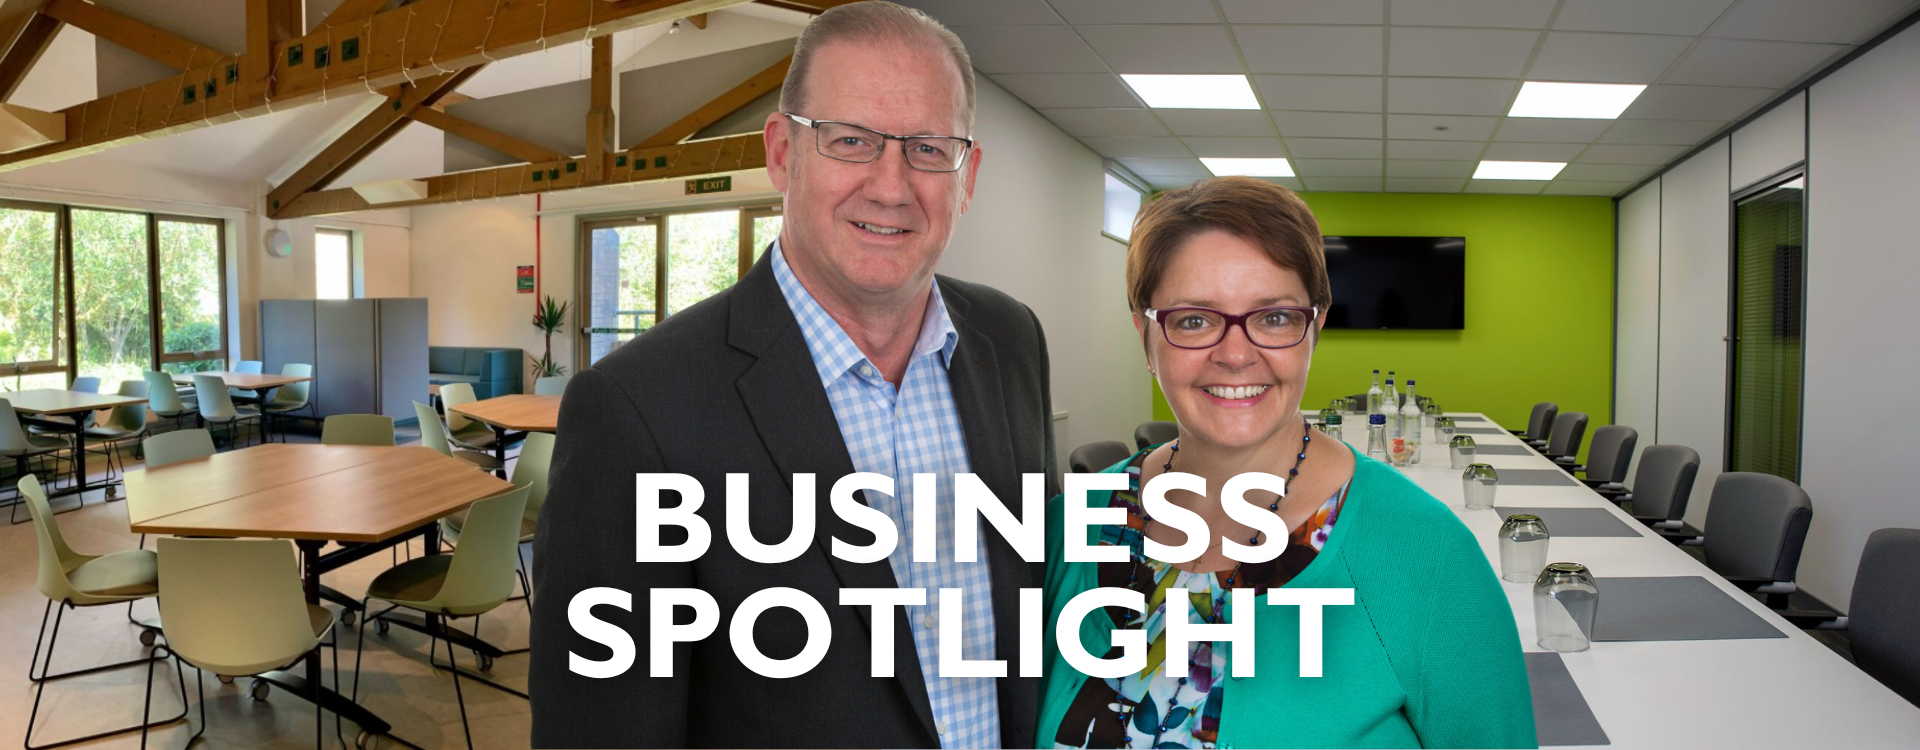 Business Spotlight Engage Workplace